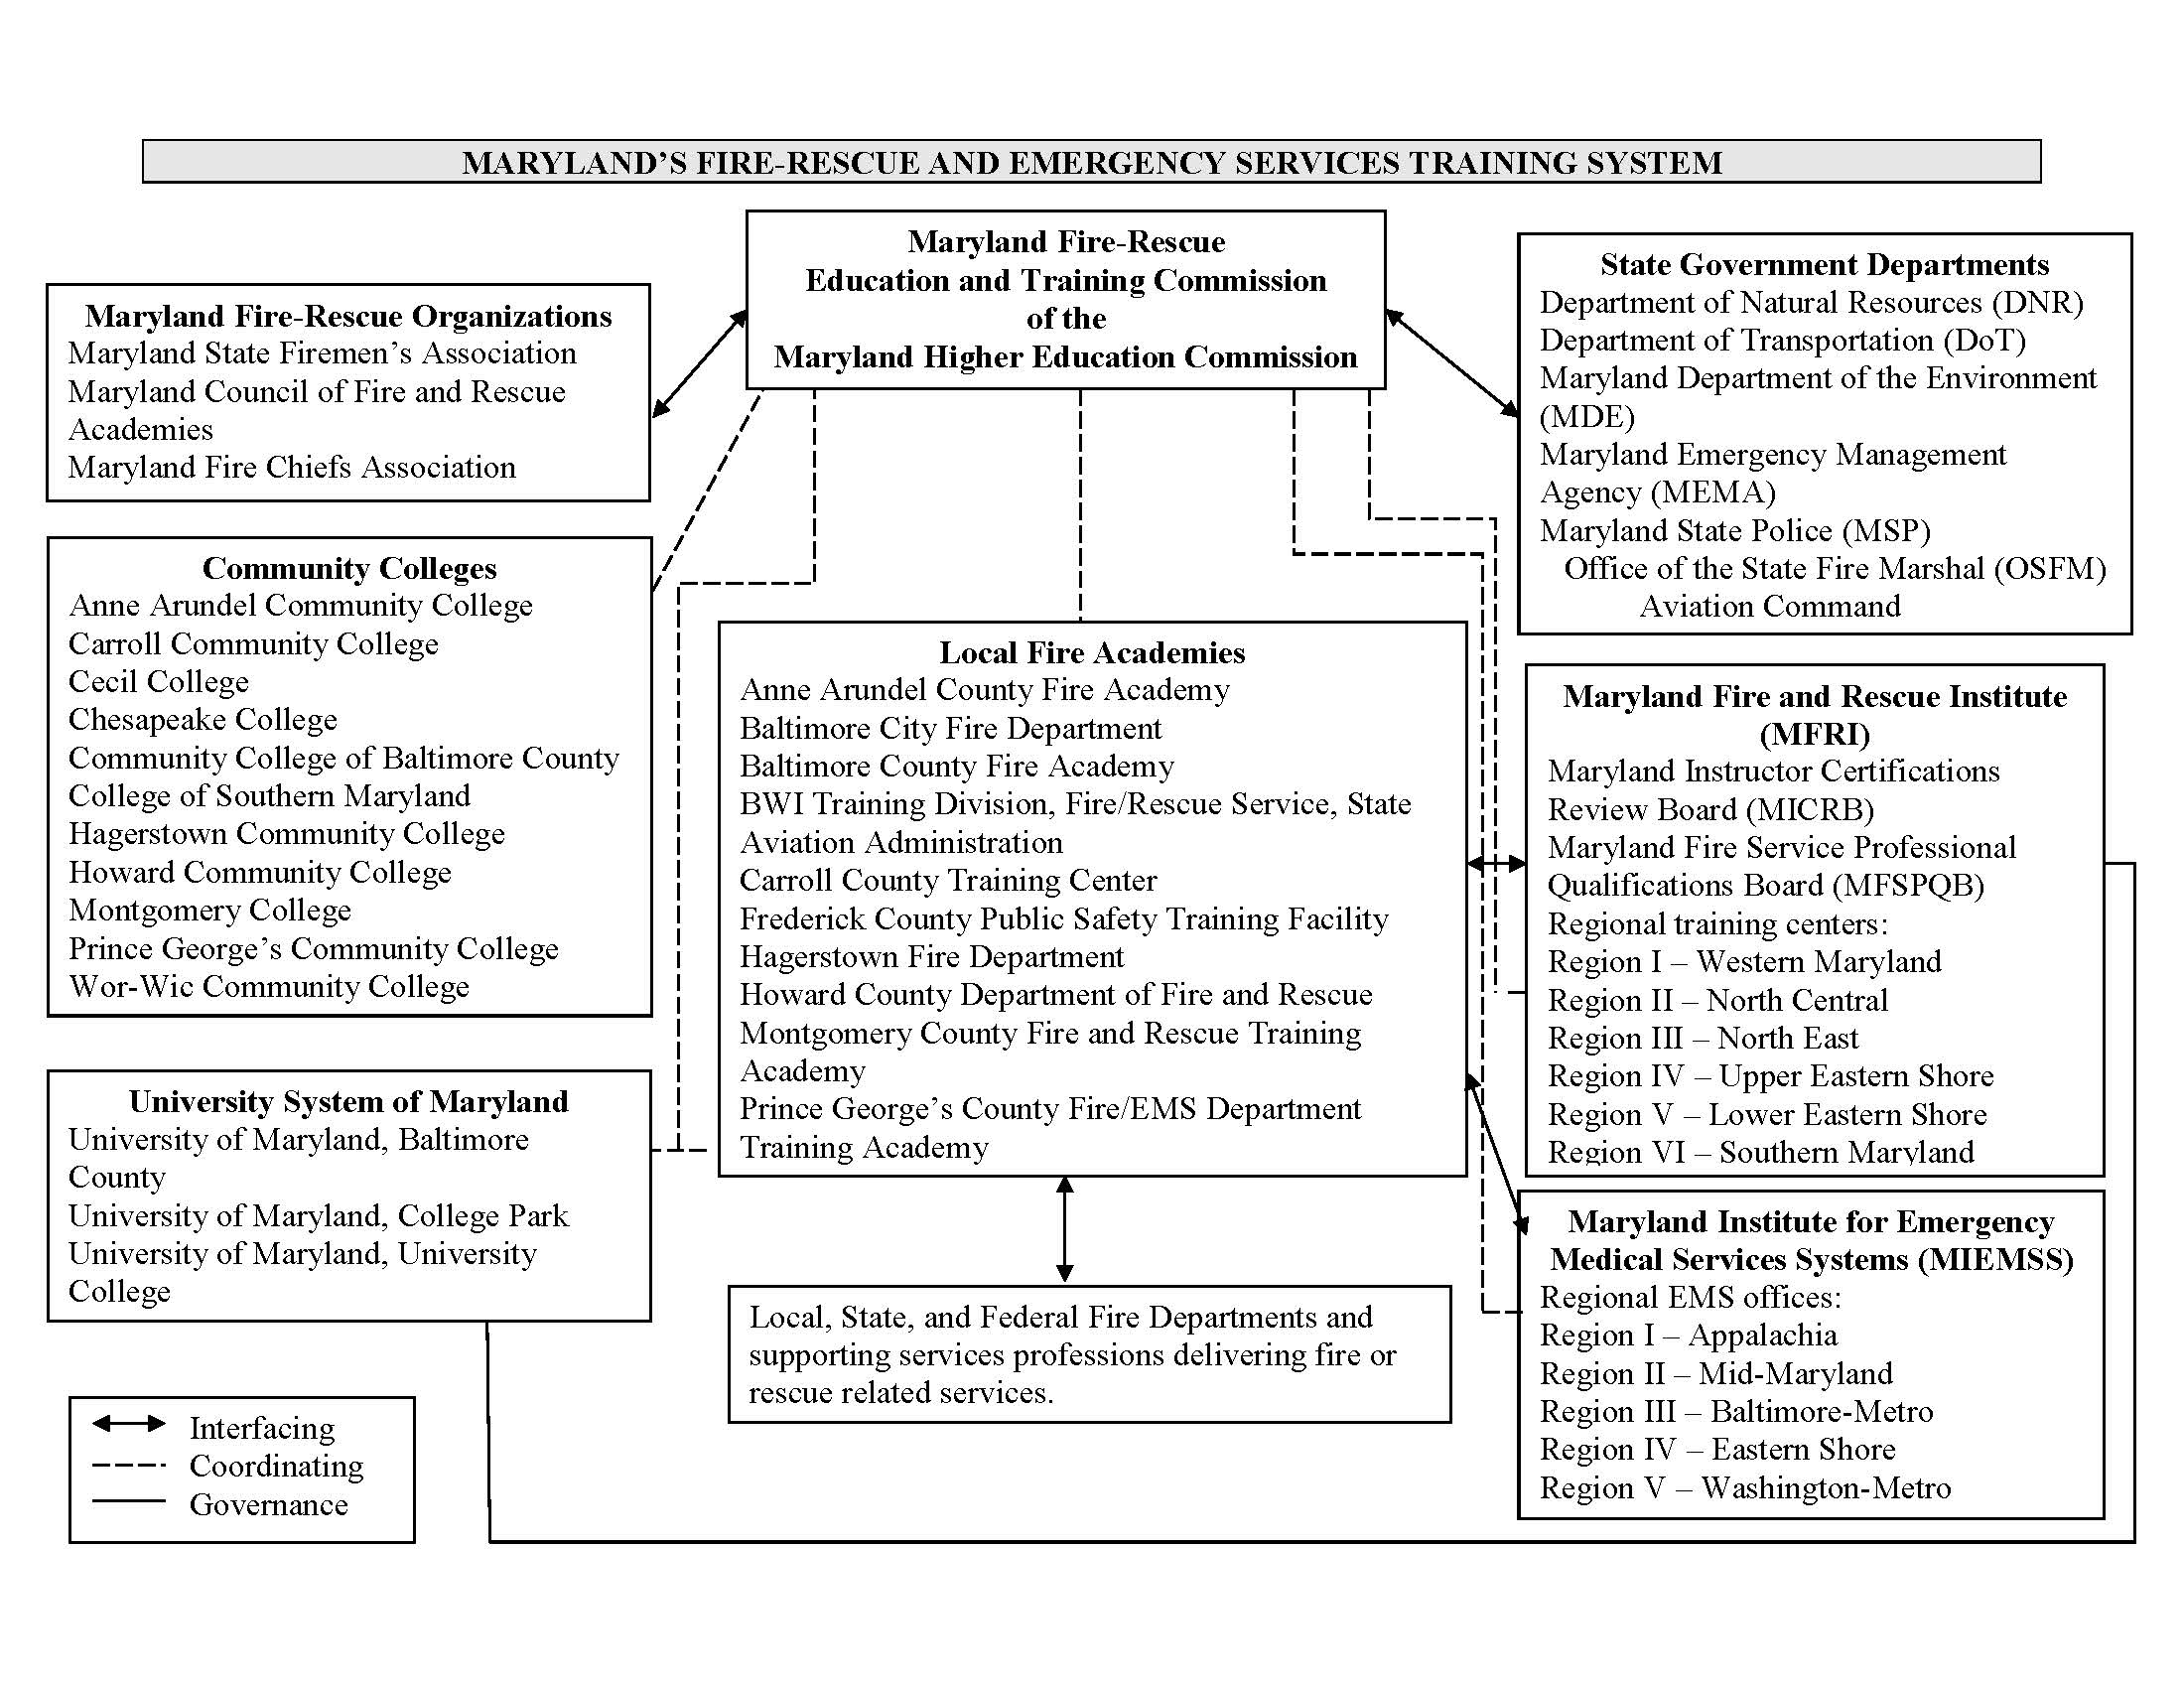 Maryland organizational chart.jpg